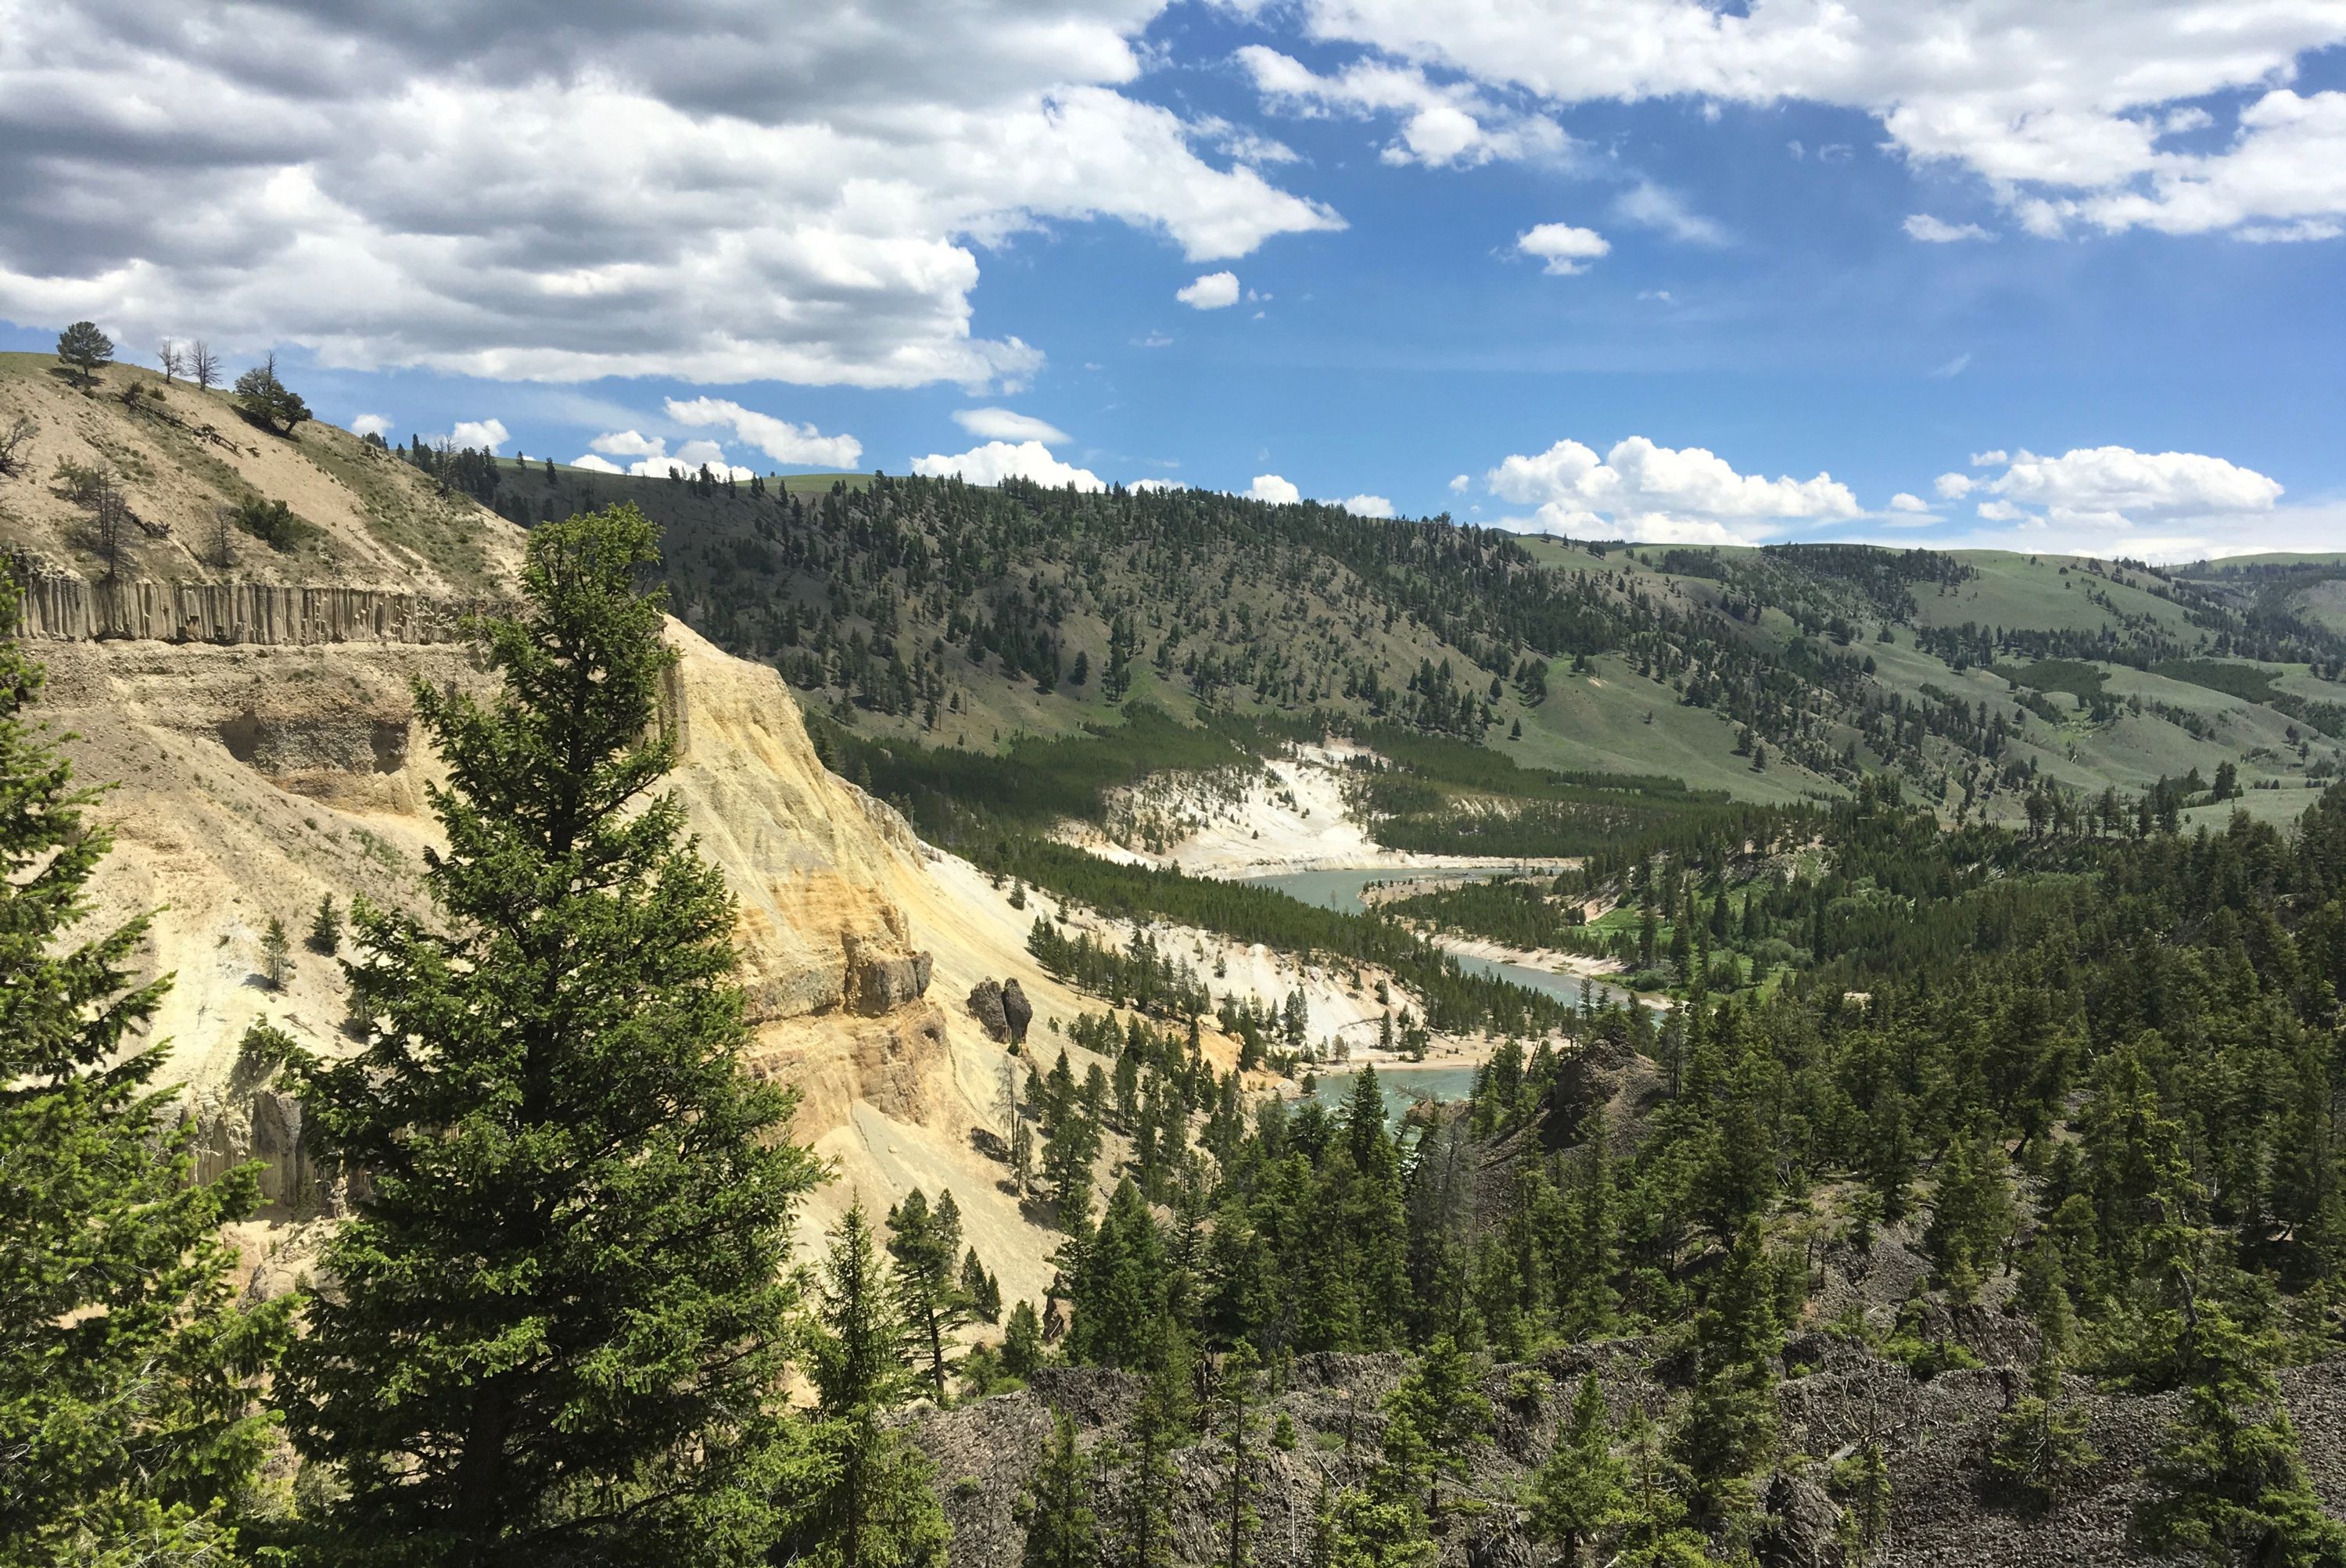 A Yellowstone vista